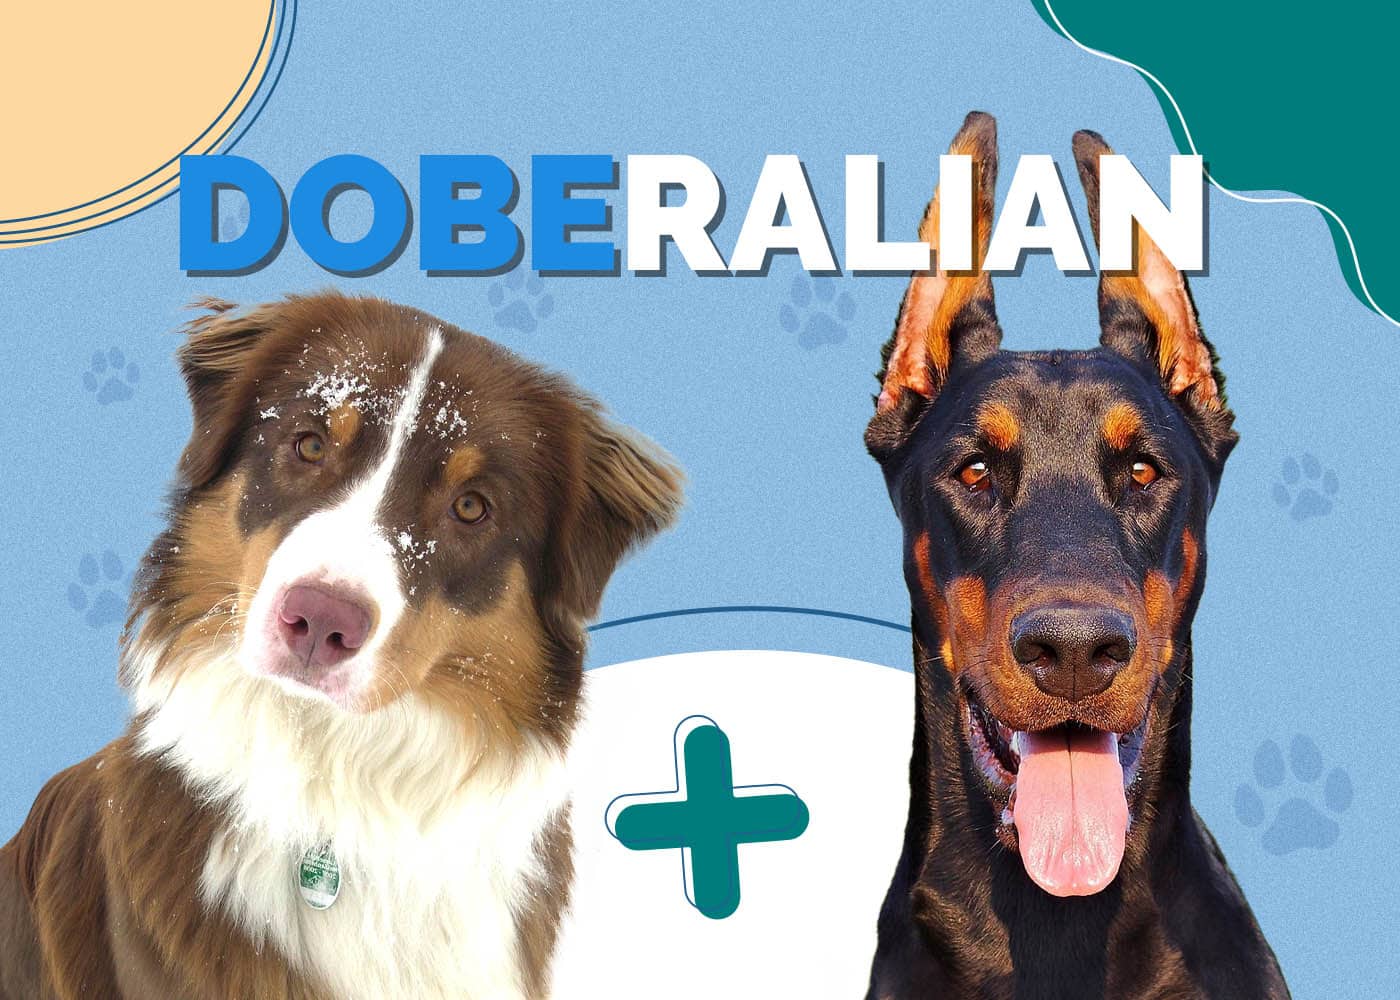 Doberman Australian Shepherd Mix (Doberalian)